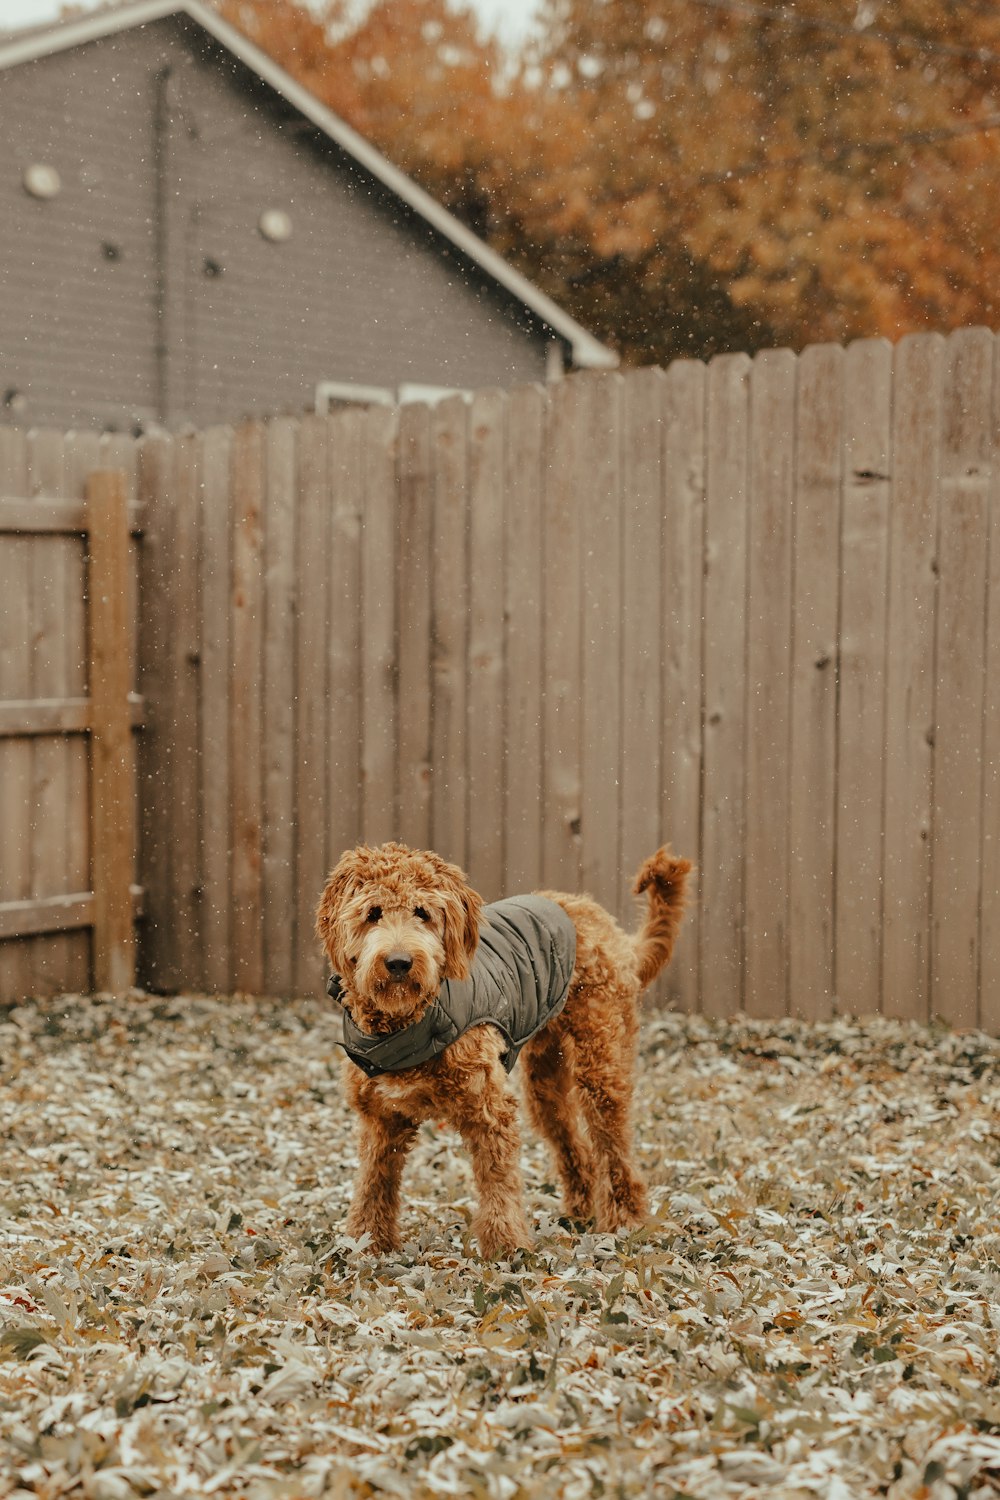 medium-coated brown dog